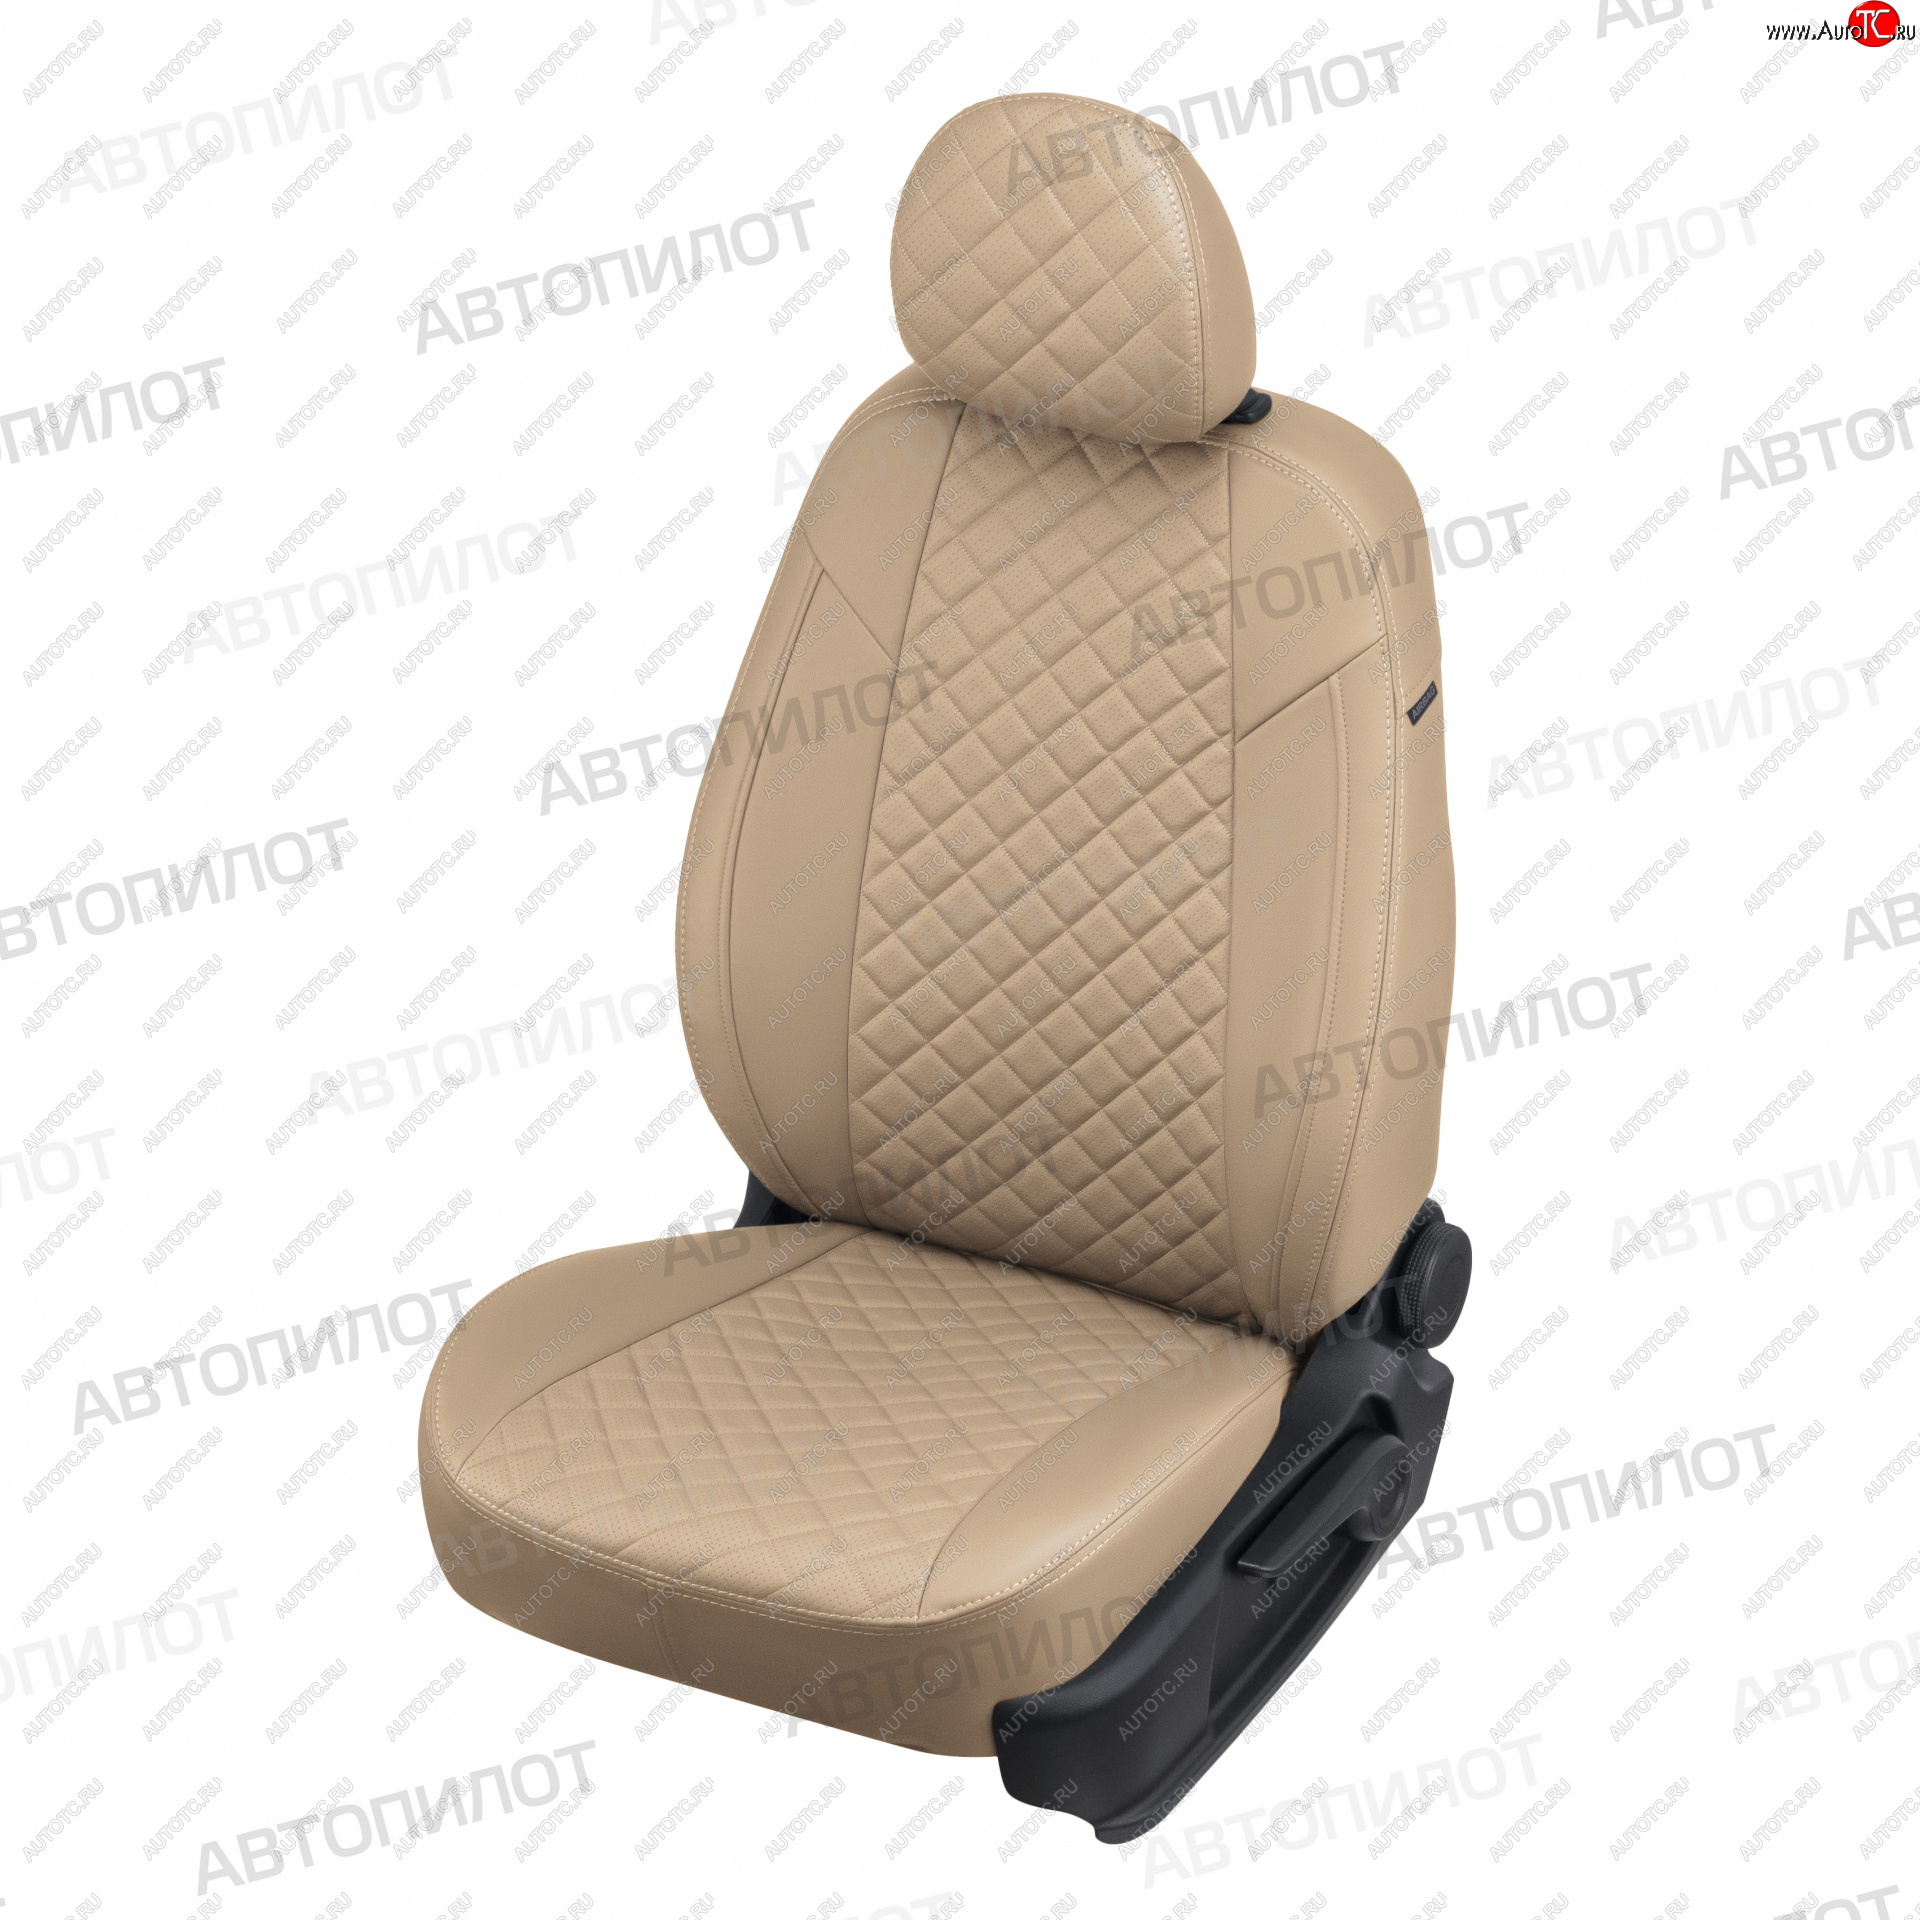 13 999 р. Чехлы сидений (экокожа) Автопилот Ромб  Hyundai Santa Fe  1 (2000-2012) (темно-бежевый)